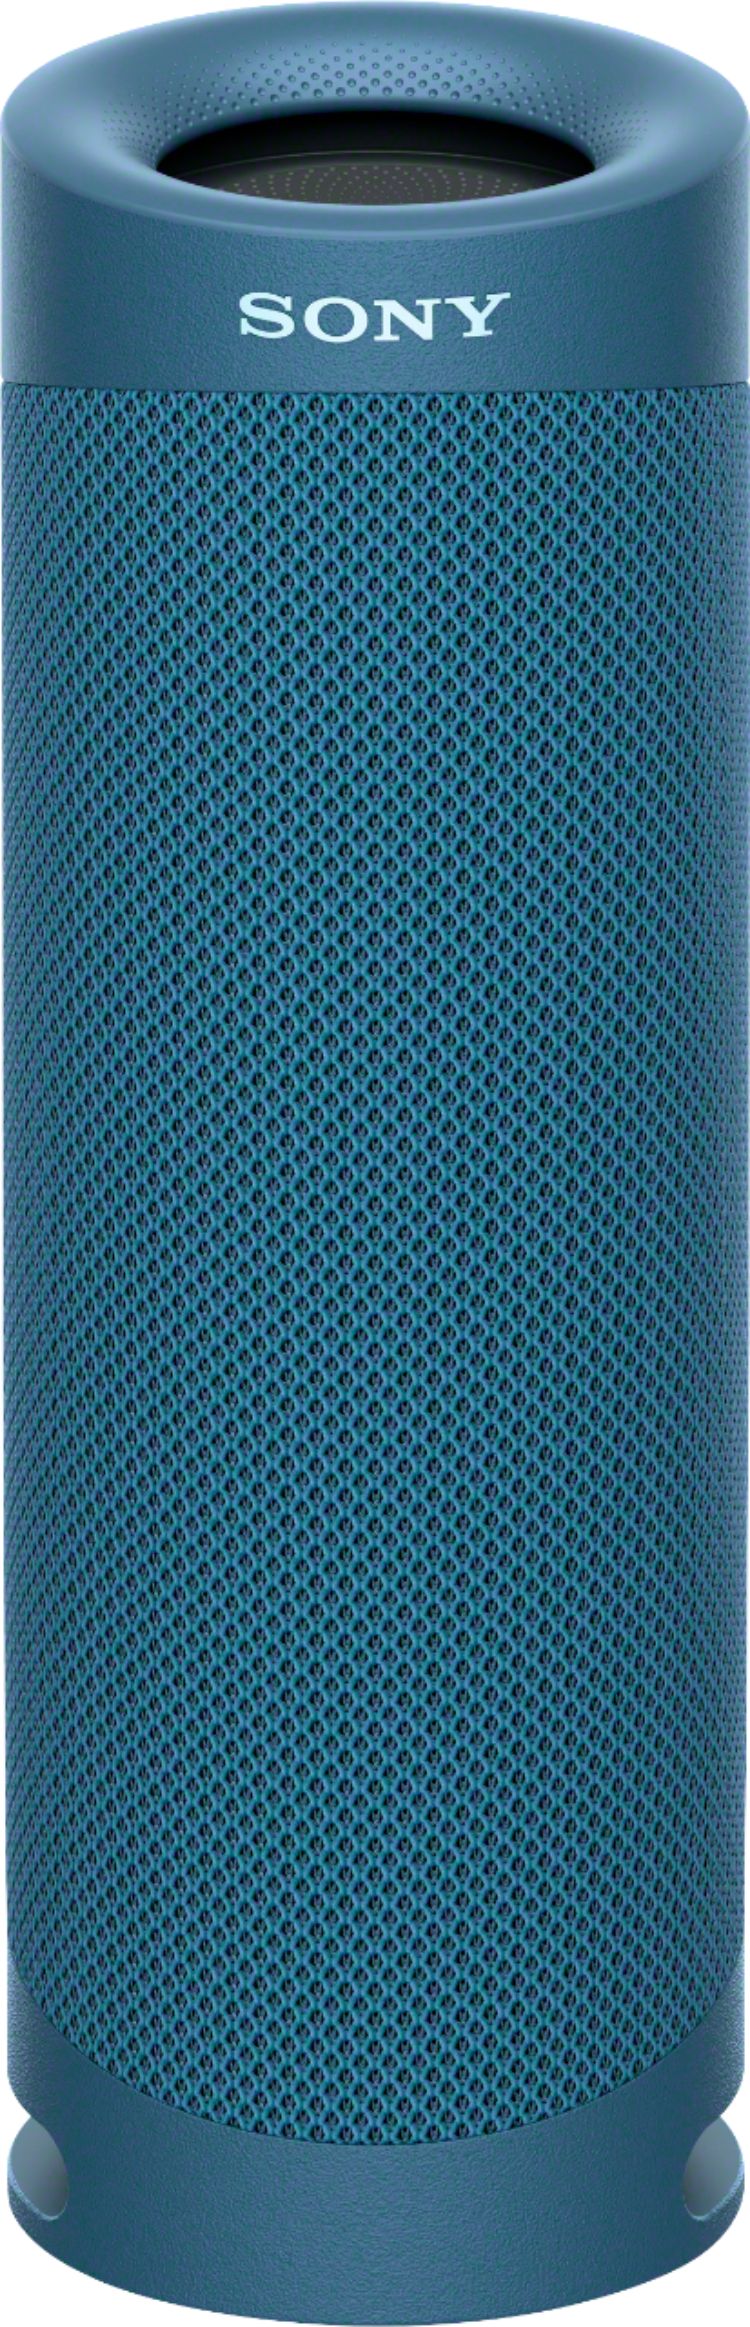 Sony SRS-XB23 Portable Bluetooth Speaker Light Blue - Best Buy